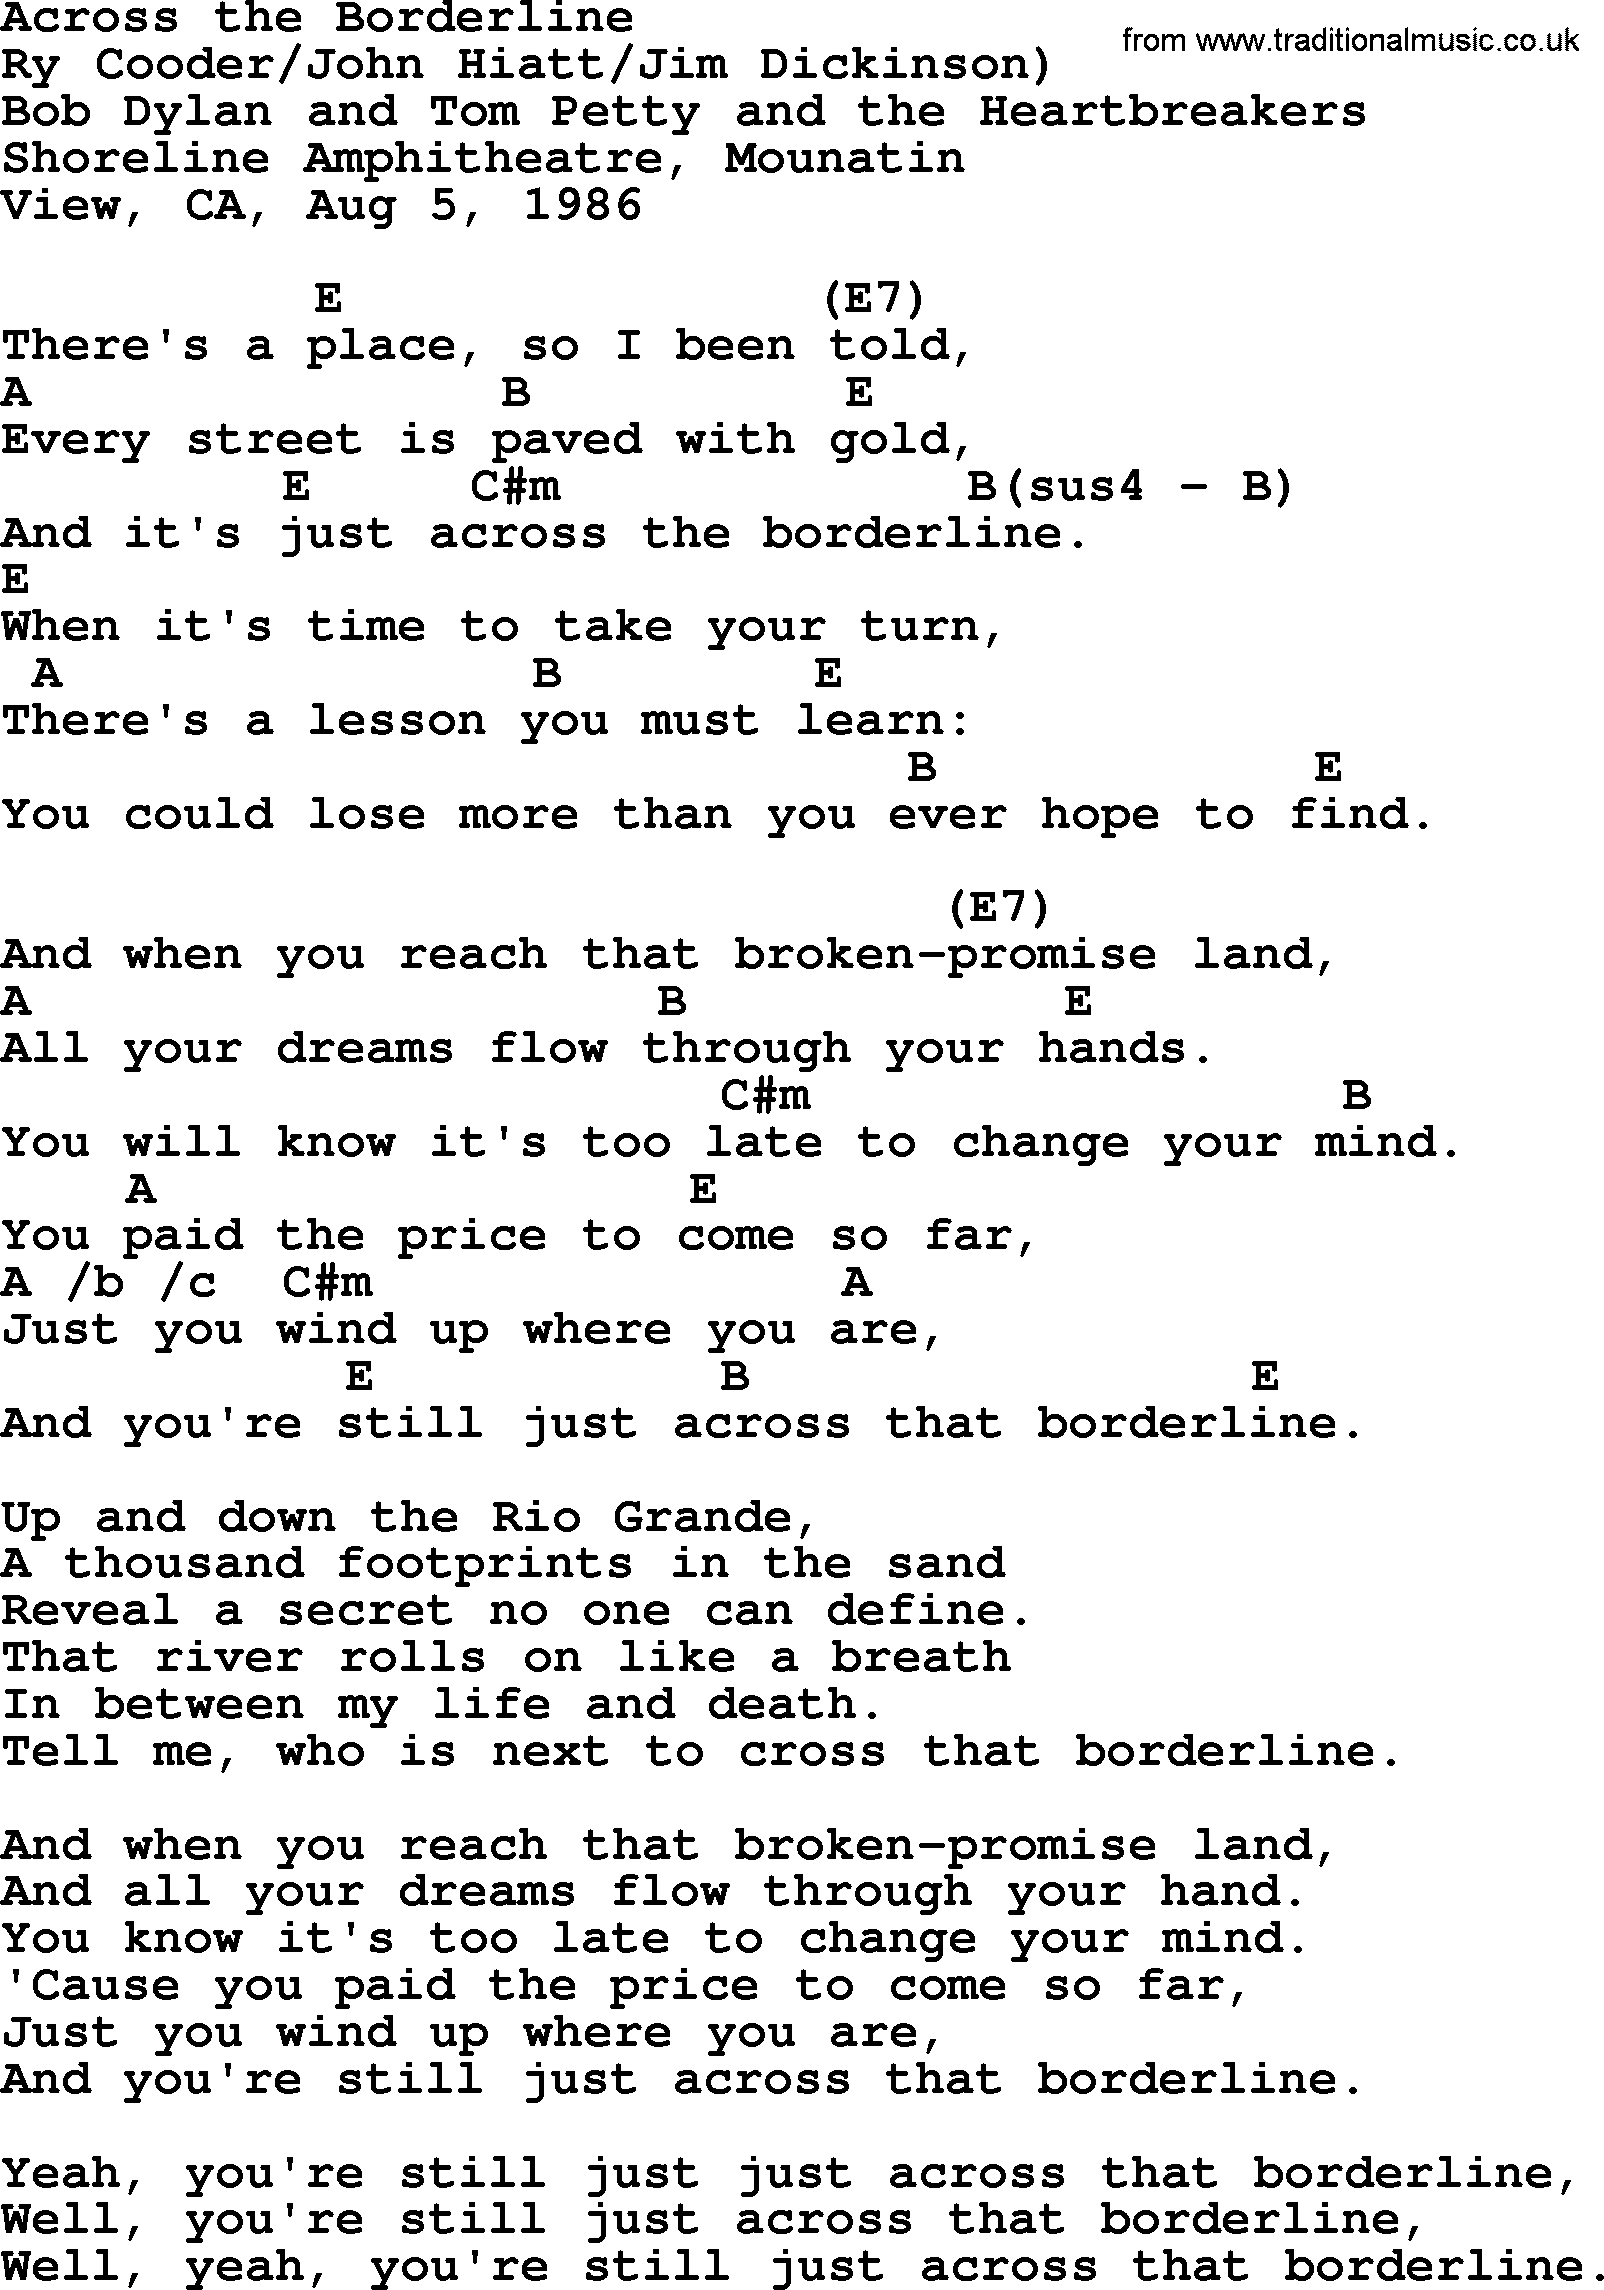 Bob Dylan song, lyrics with chords - Across the Borderline